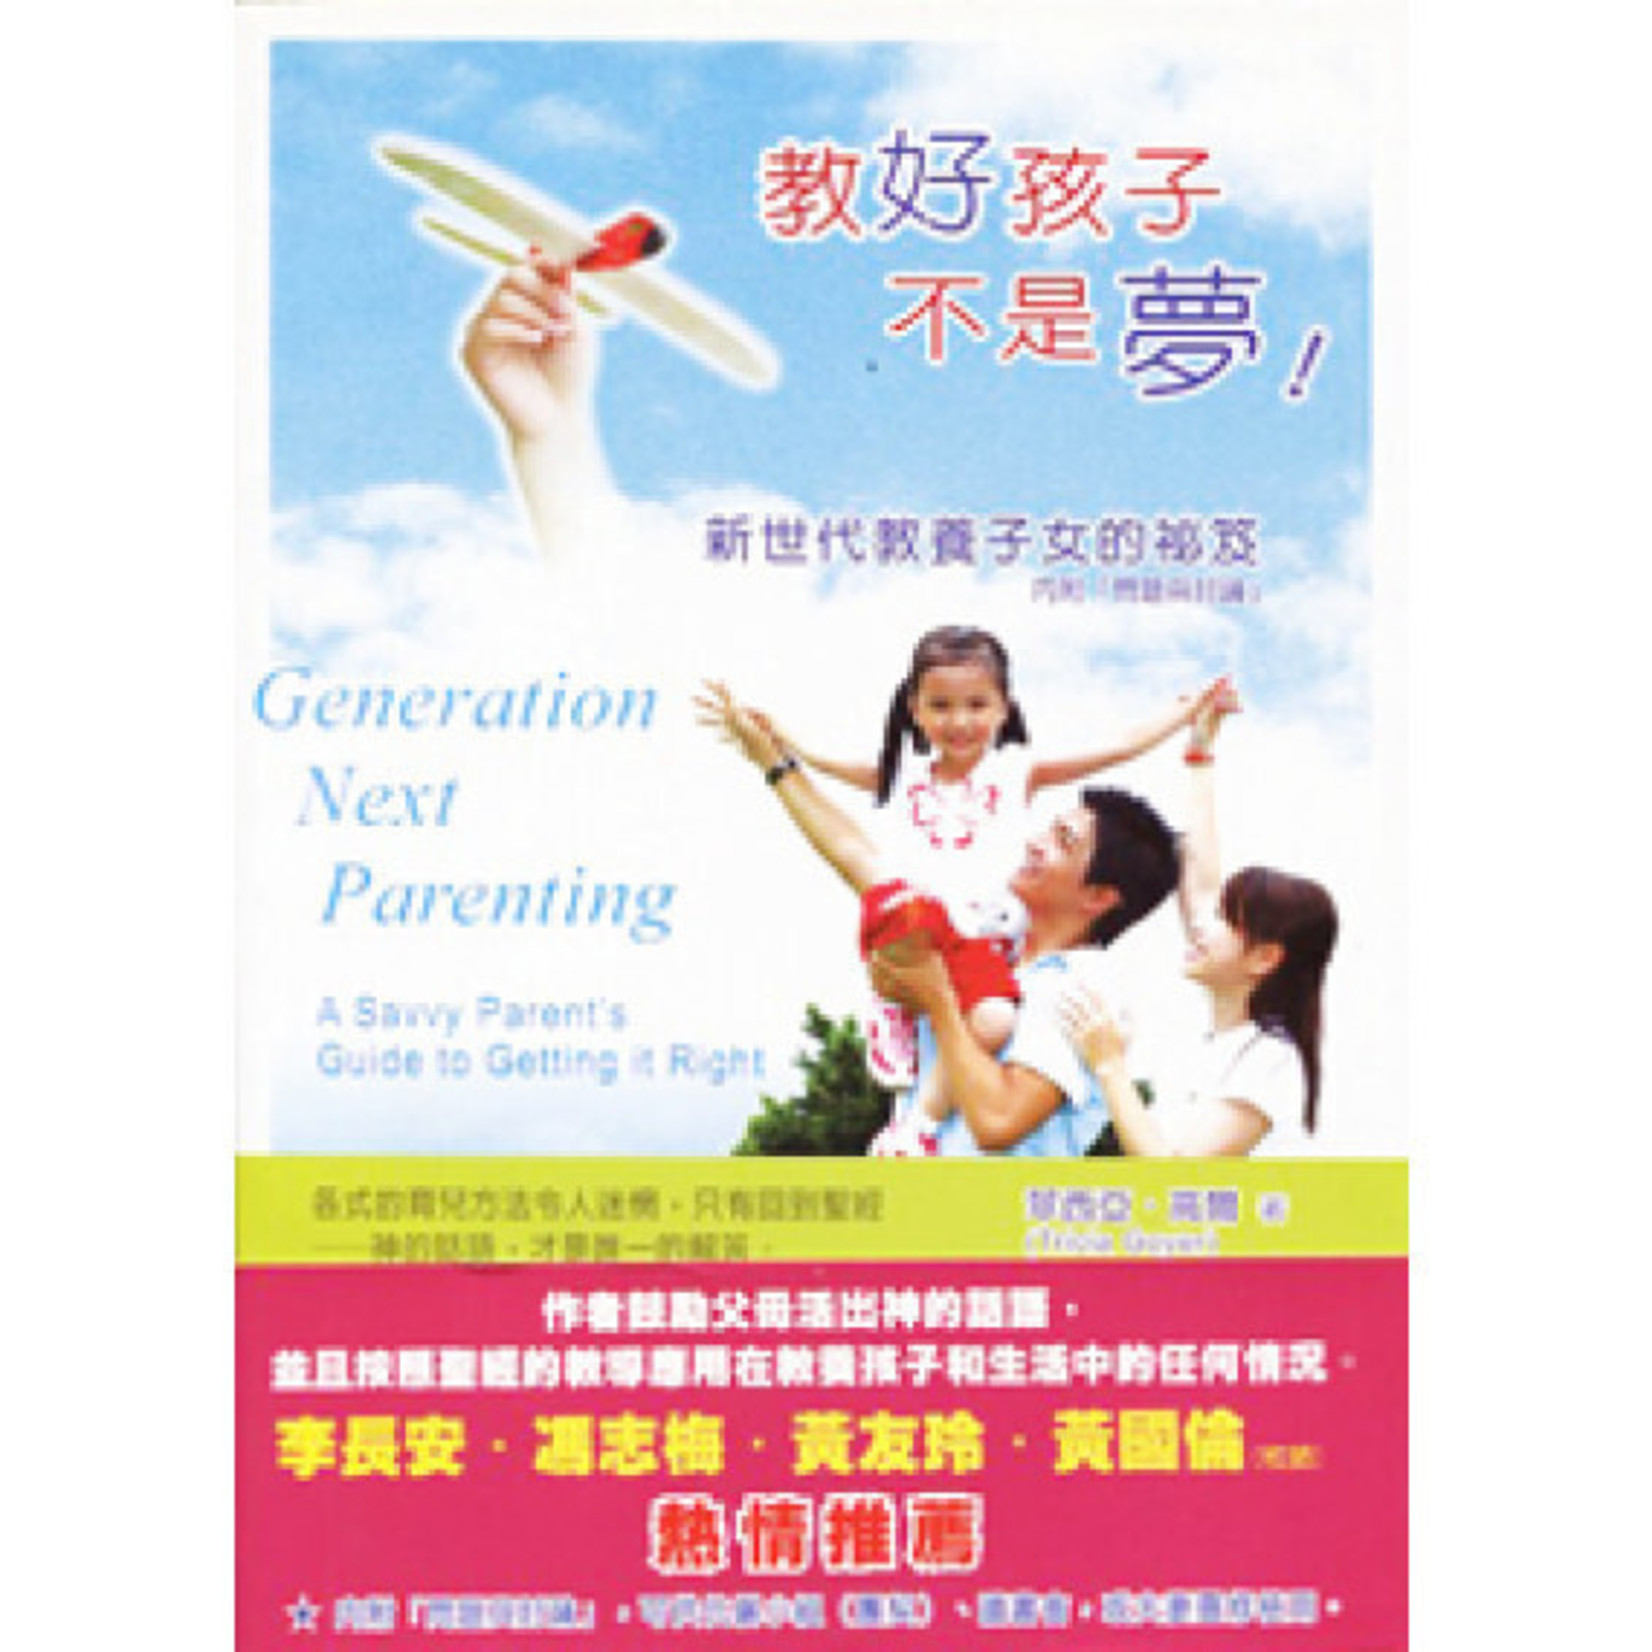 中國主日學協會 China Sunday School Association 教好孩子不是夢：新世代教養子女的秘笈 | Generation Next Parenting : A Savvy Parent's guide to getting it right（斷版）